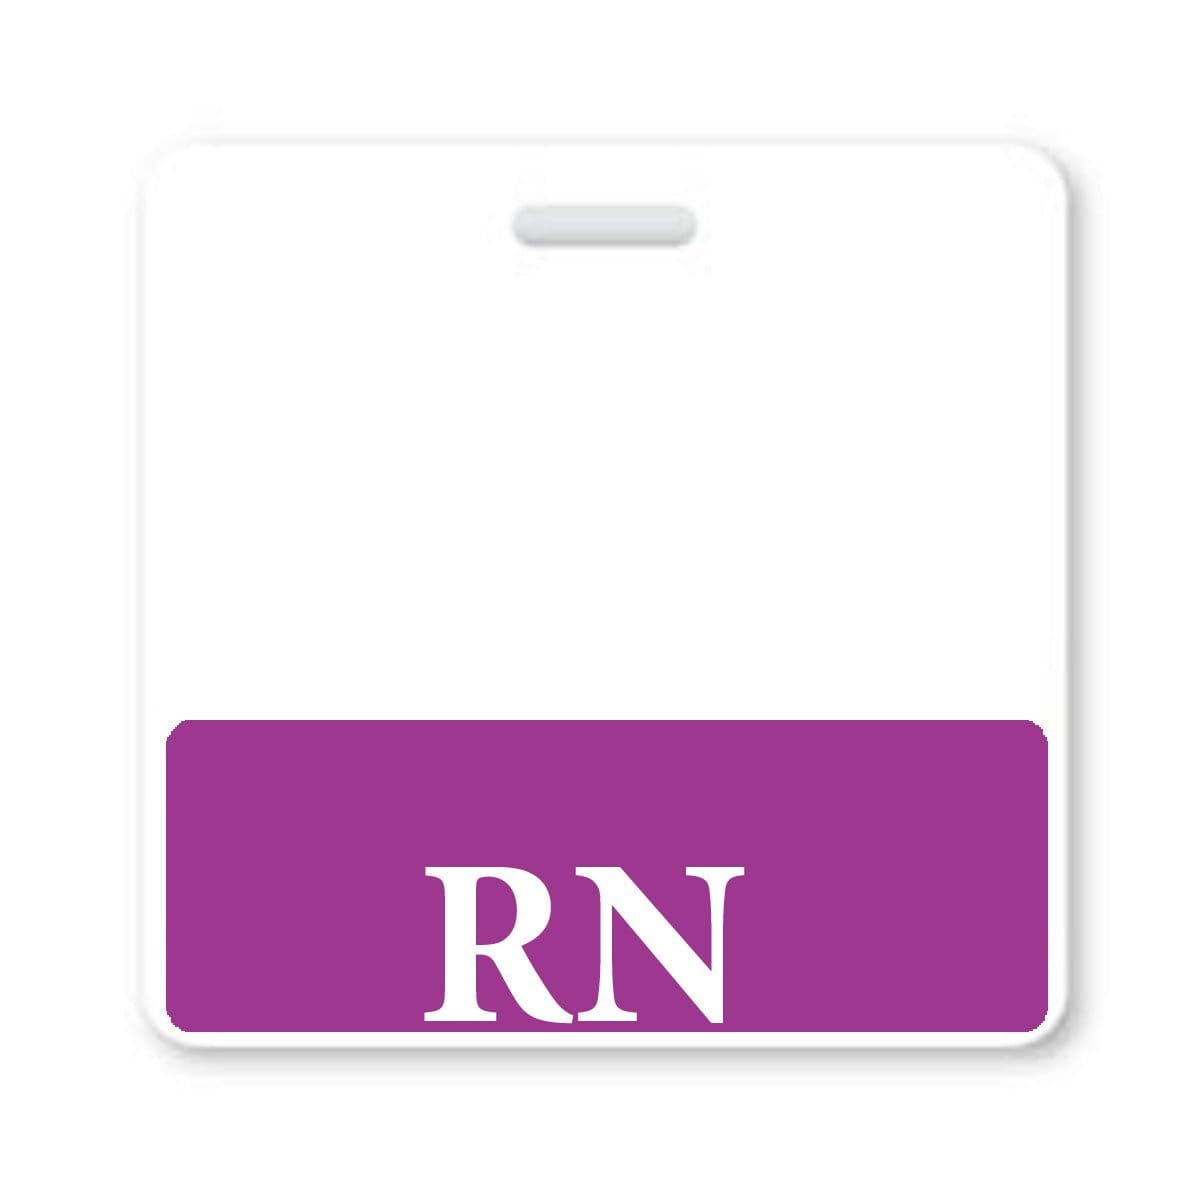 MSN RN Badge - Pink/Blue - Horizontal Badge Id Card for Registered